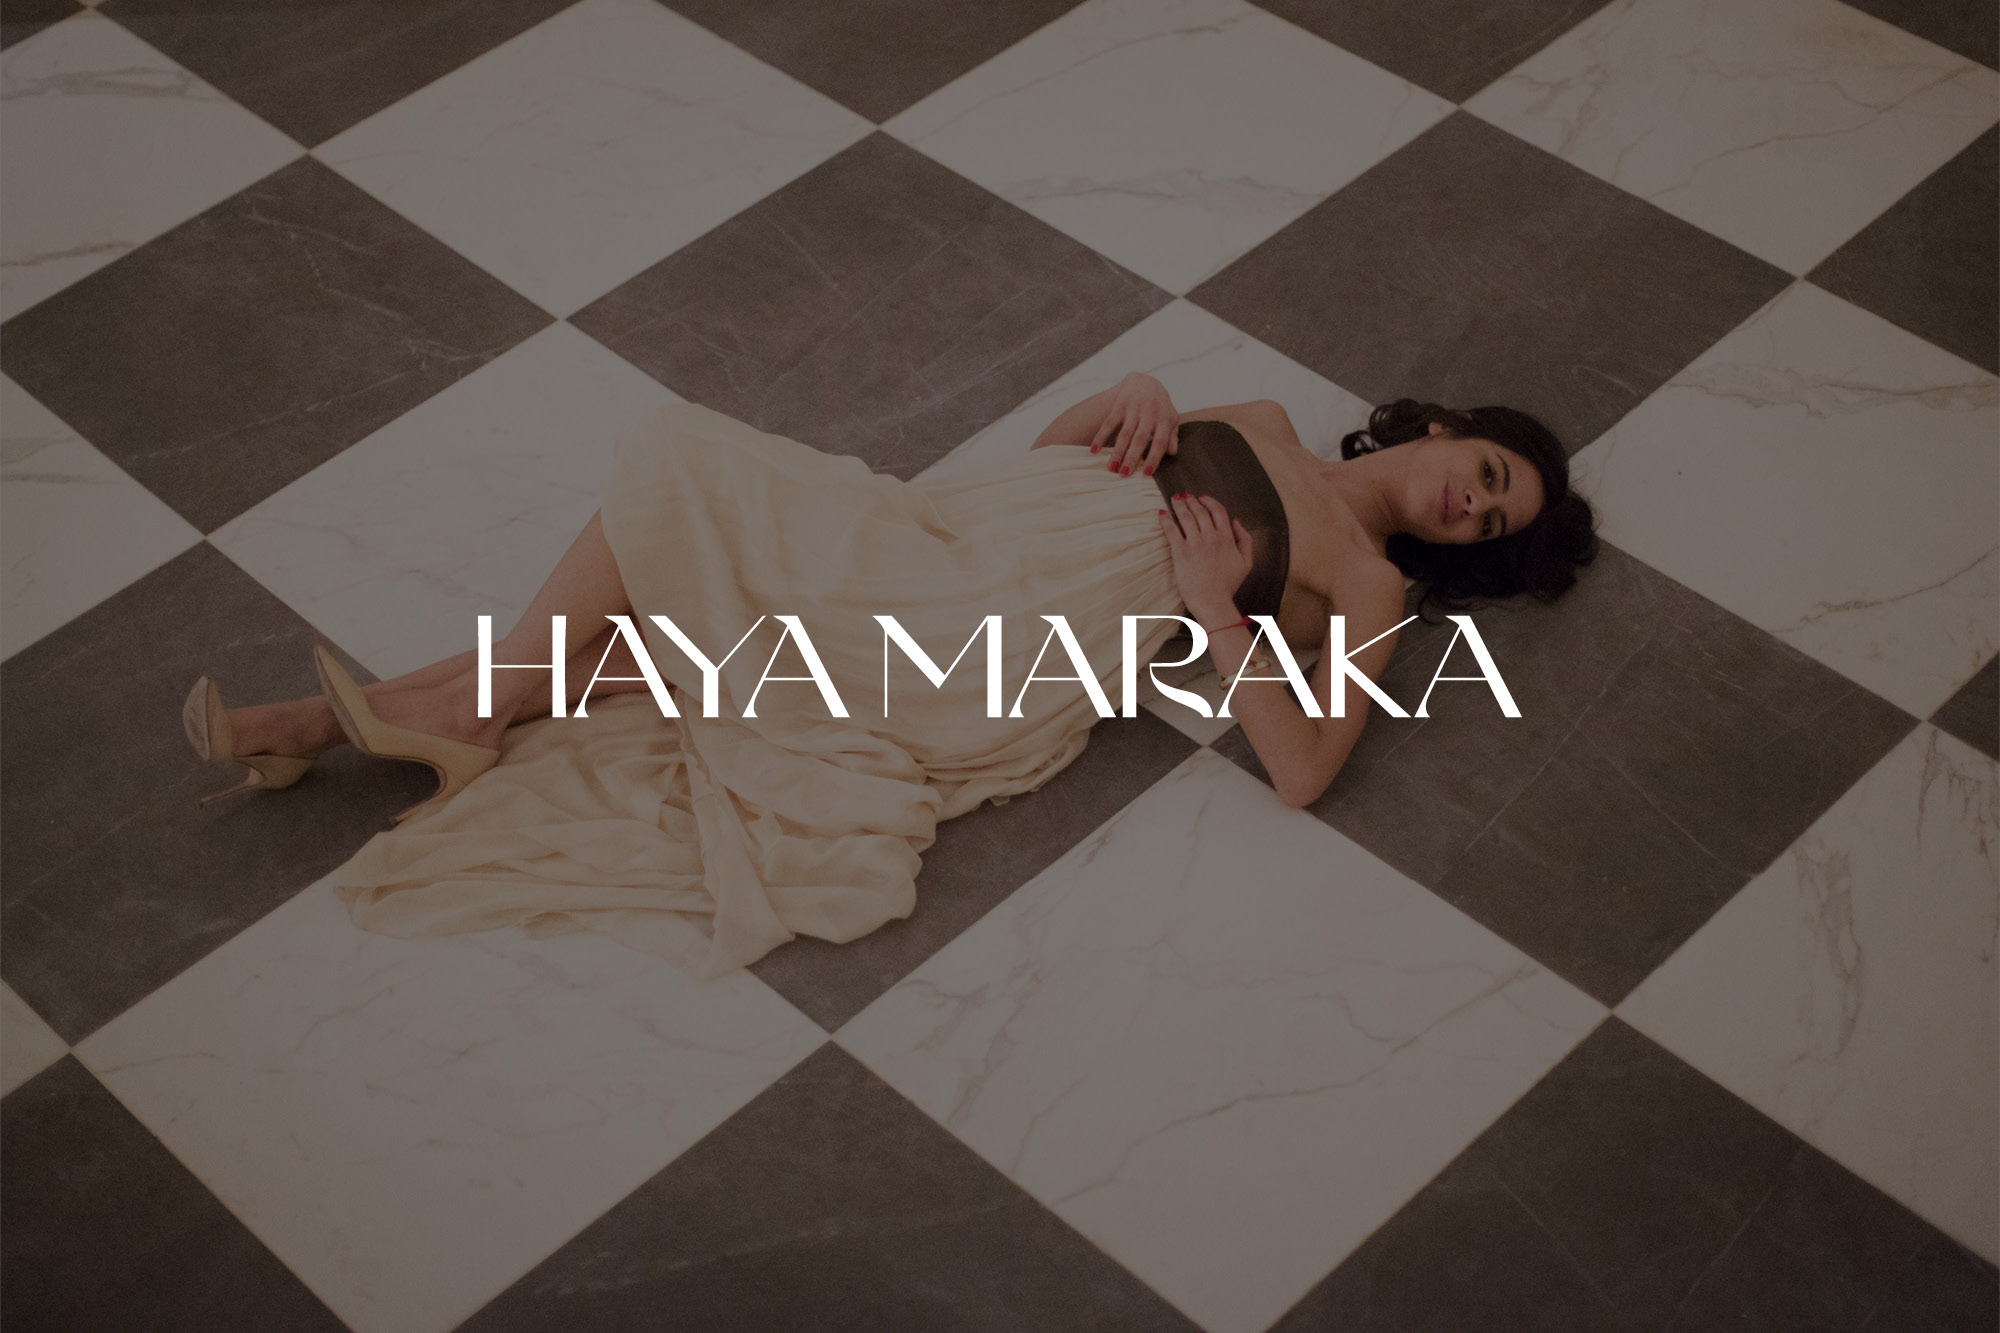 Haya Maraka